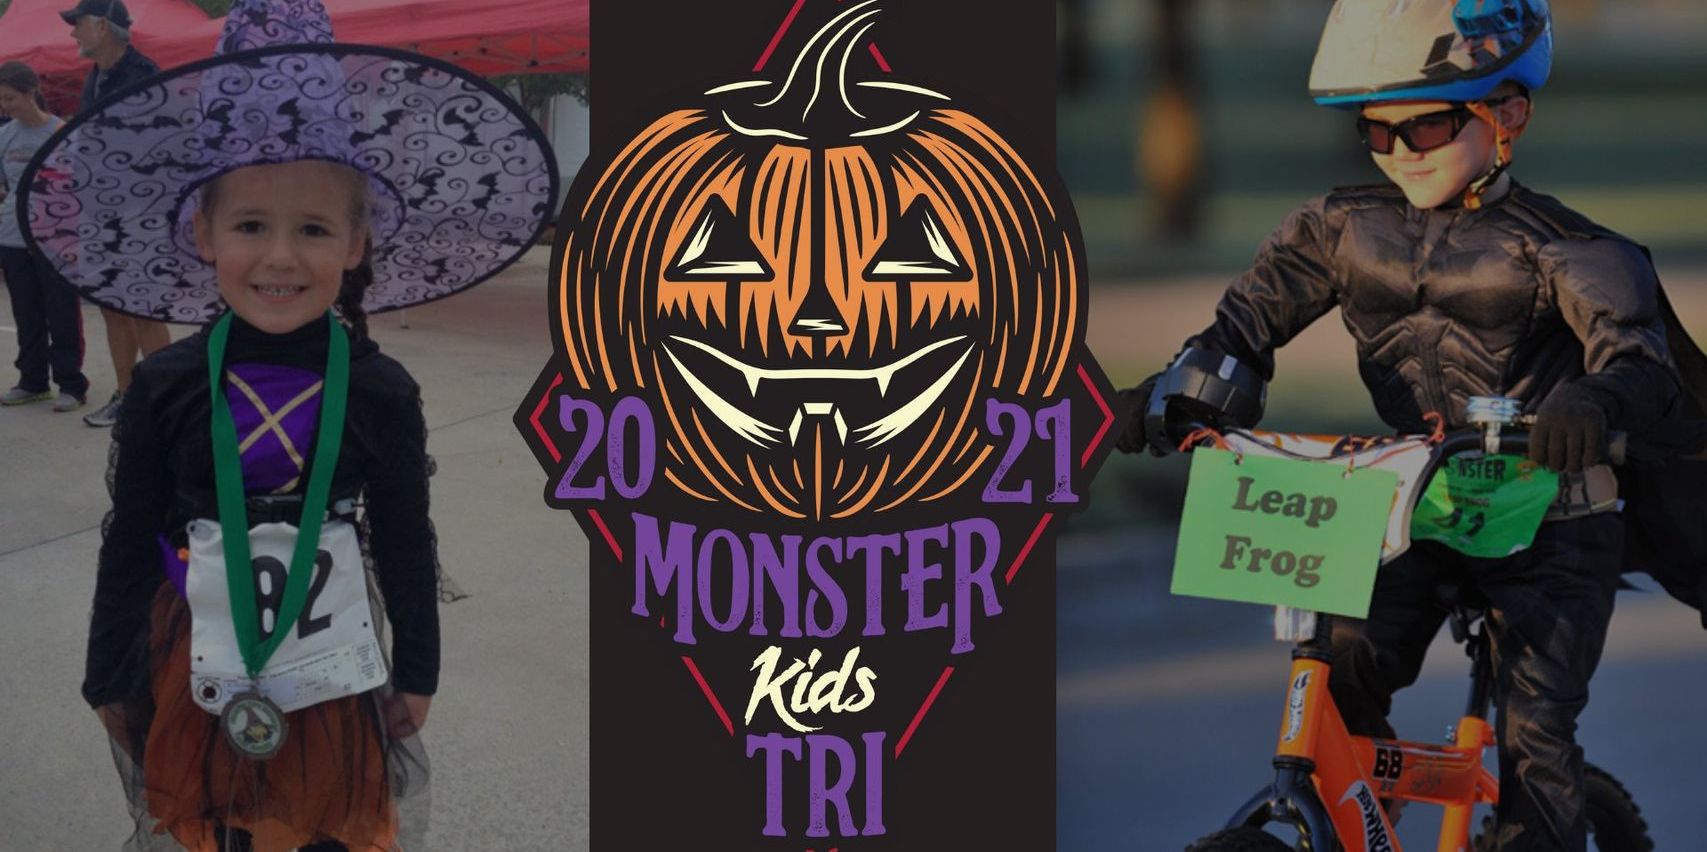 Monster Kid’s Tri promotional image